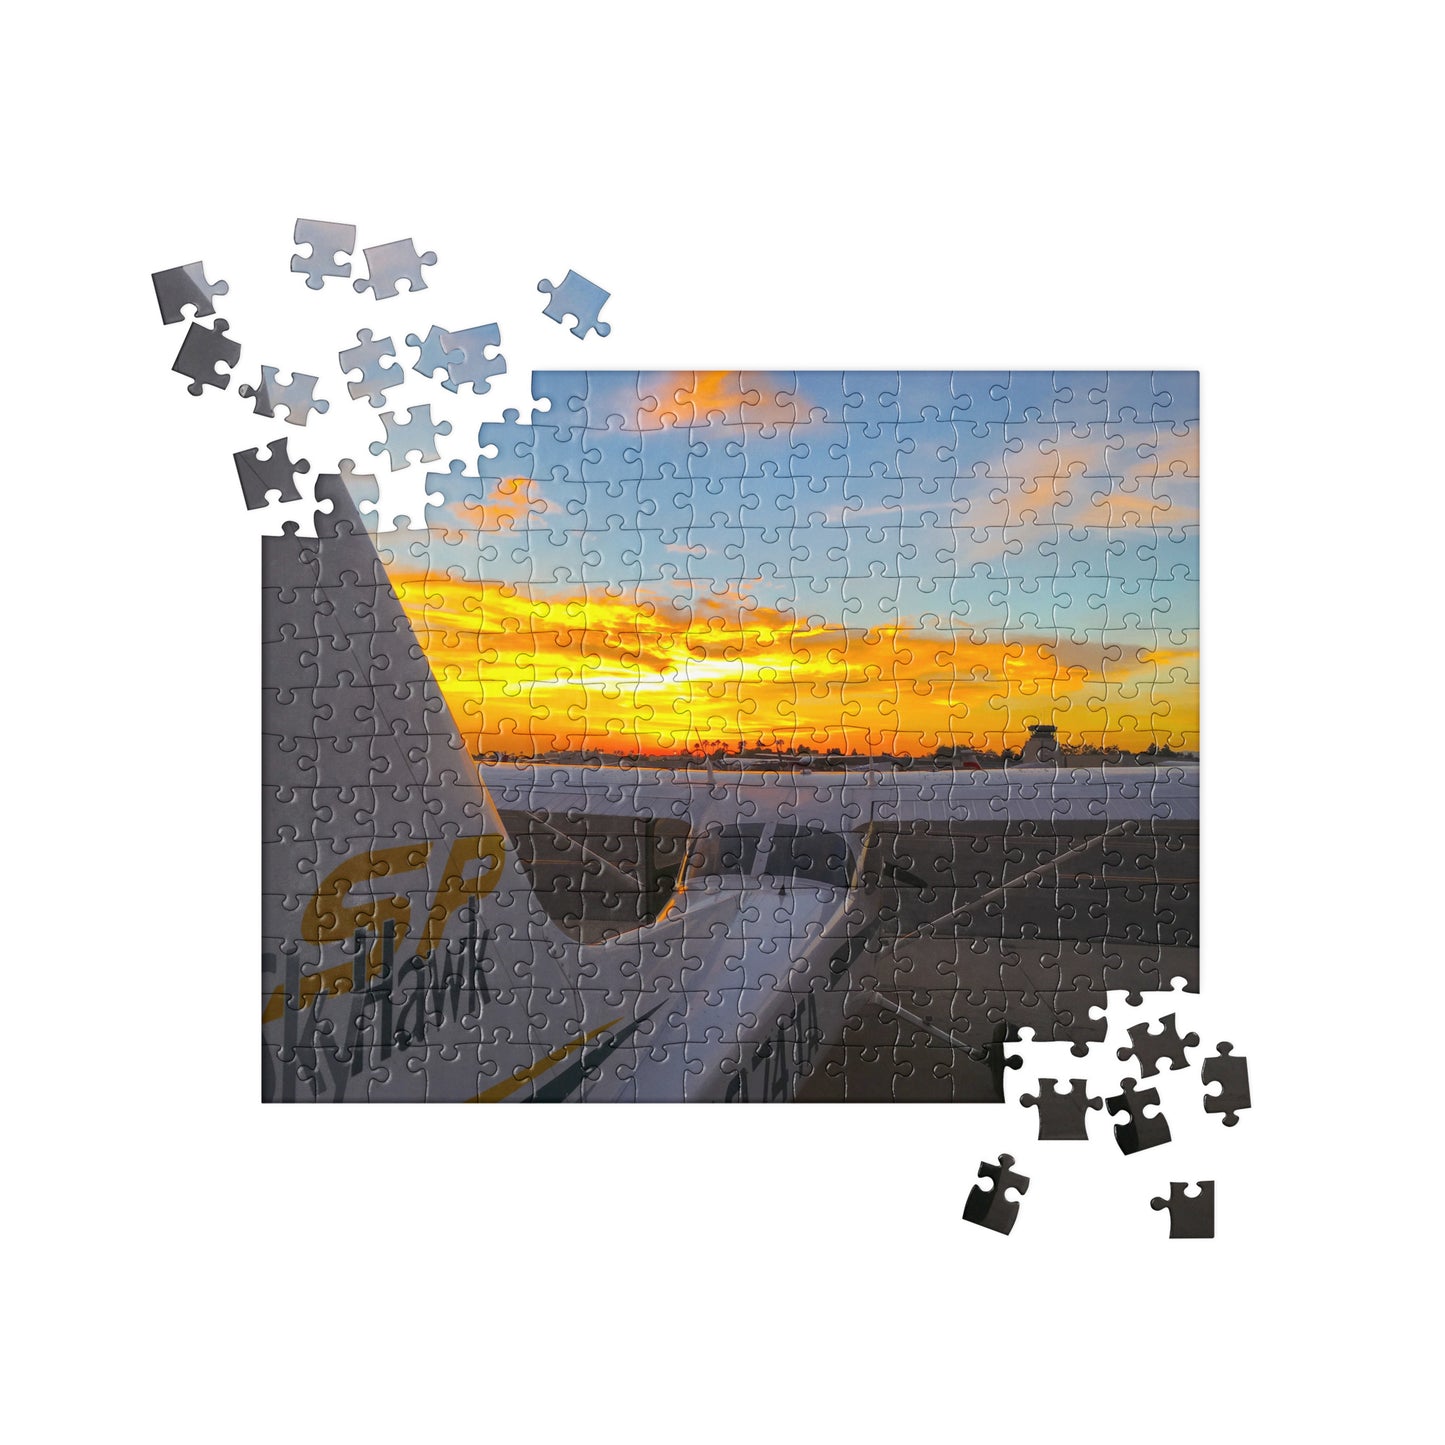 Skyhawk at dusk at Santa Monica Airport jigsaw puzzle